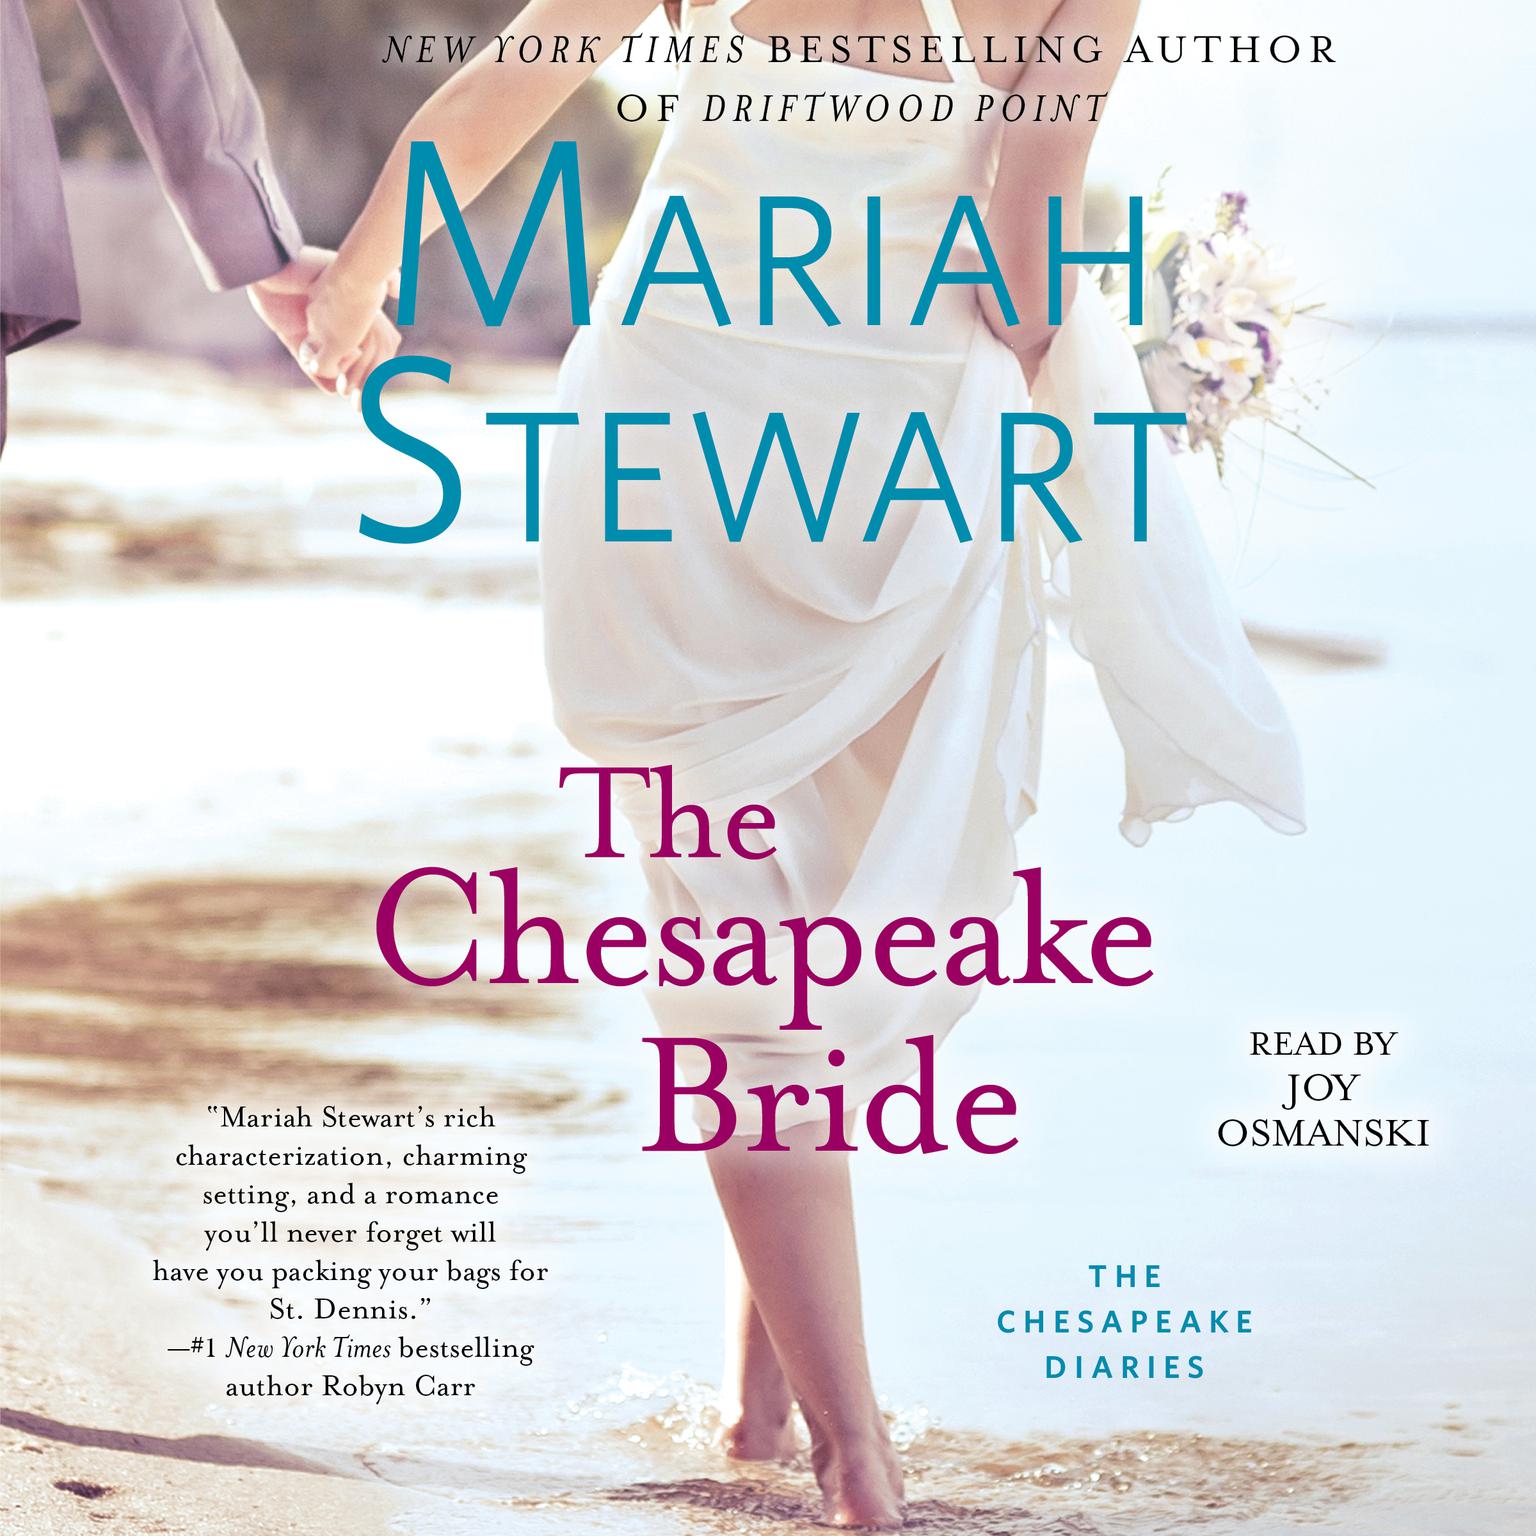 The Chesapeake Bride: A Novel Audiobook, by Mariah Stewart